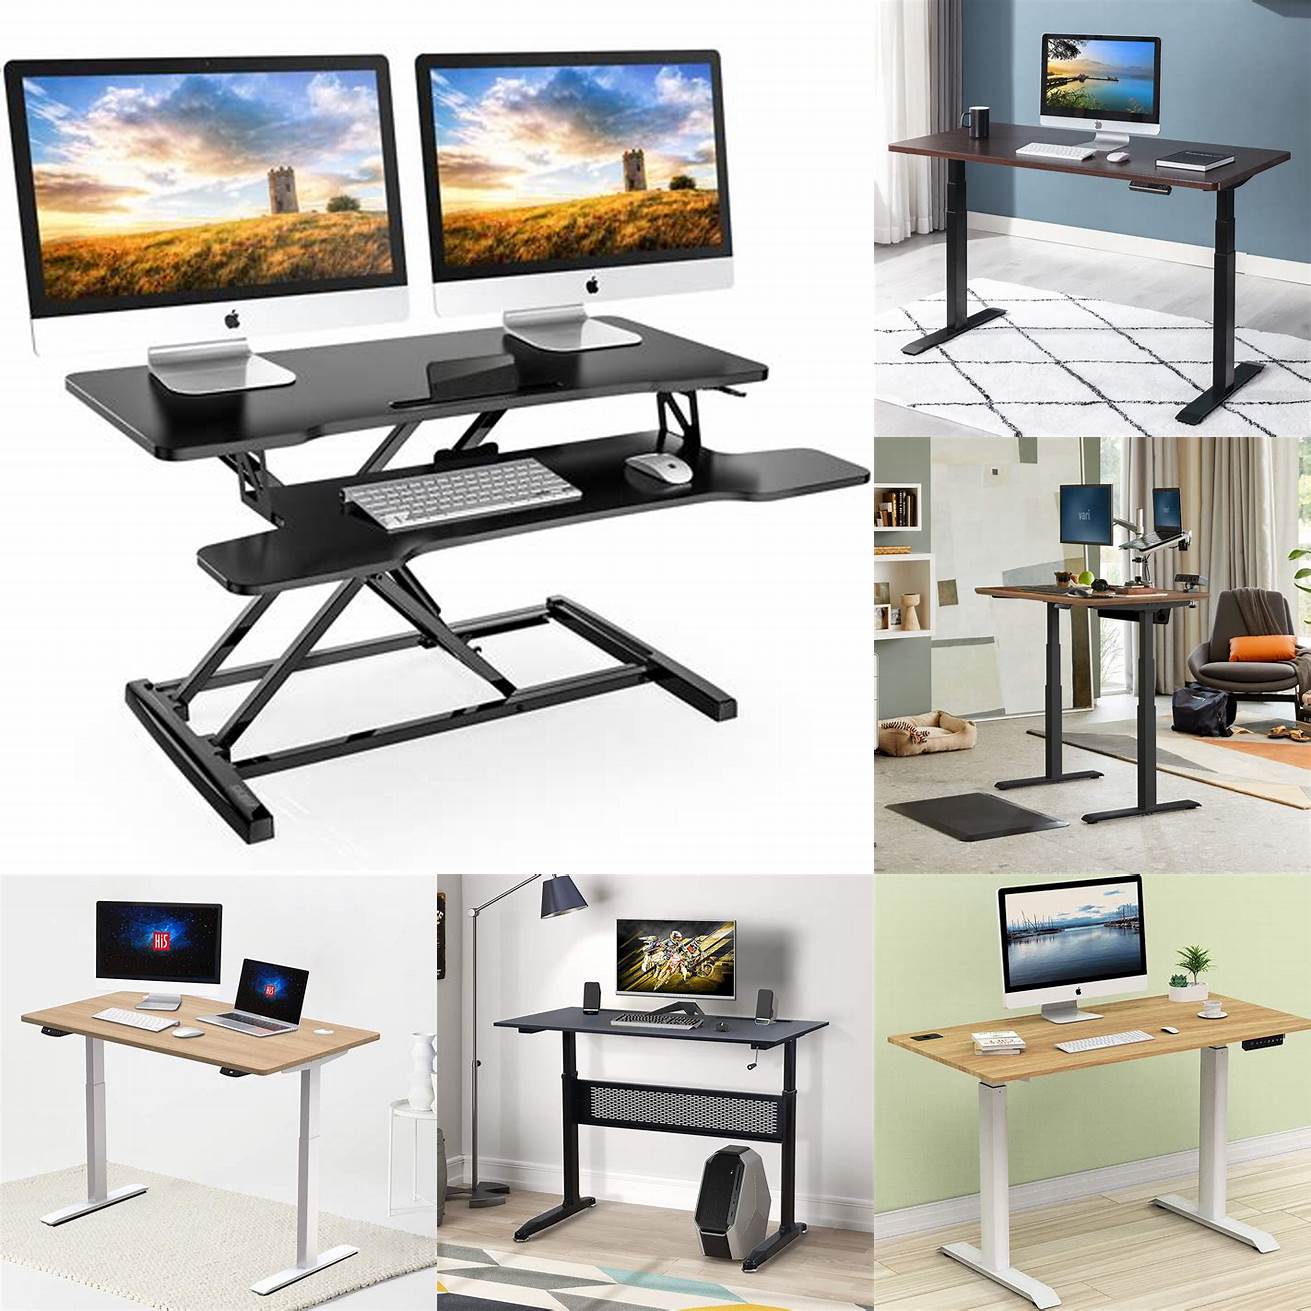 Adjustable standing desks